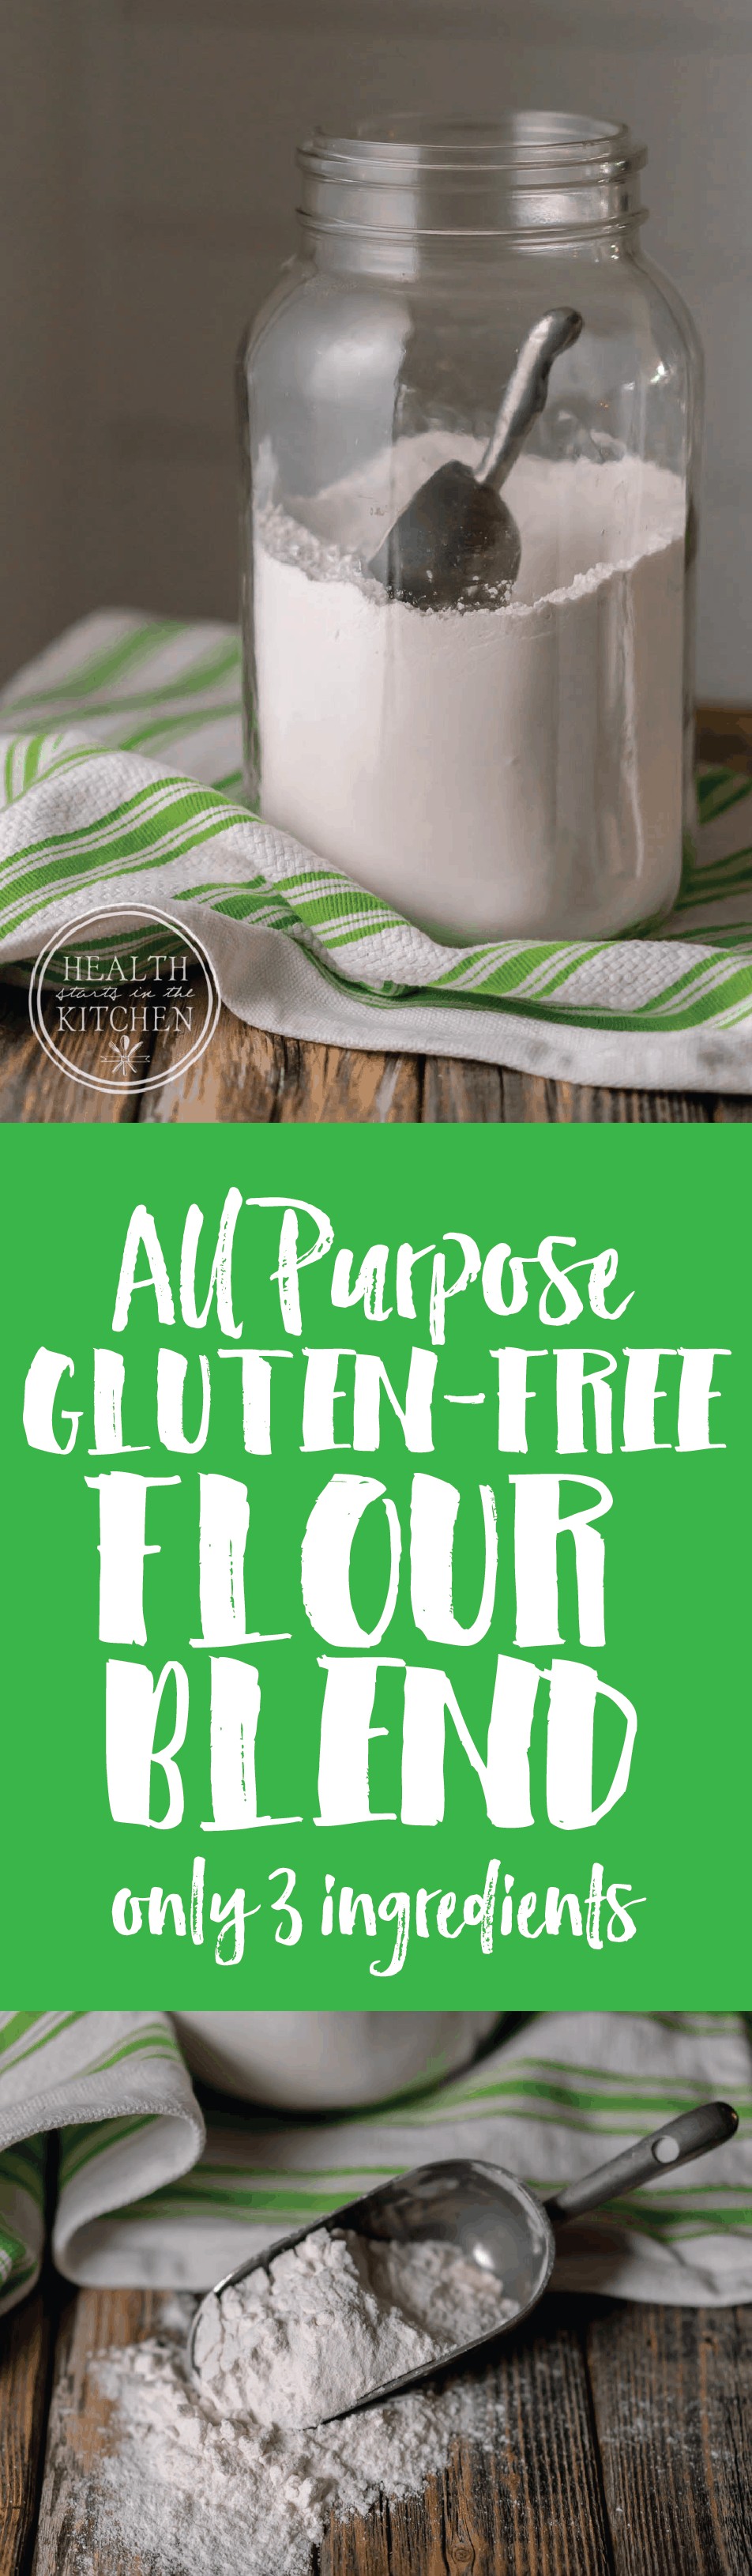 All Purpose Gluten-Free Flour Blend